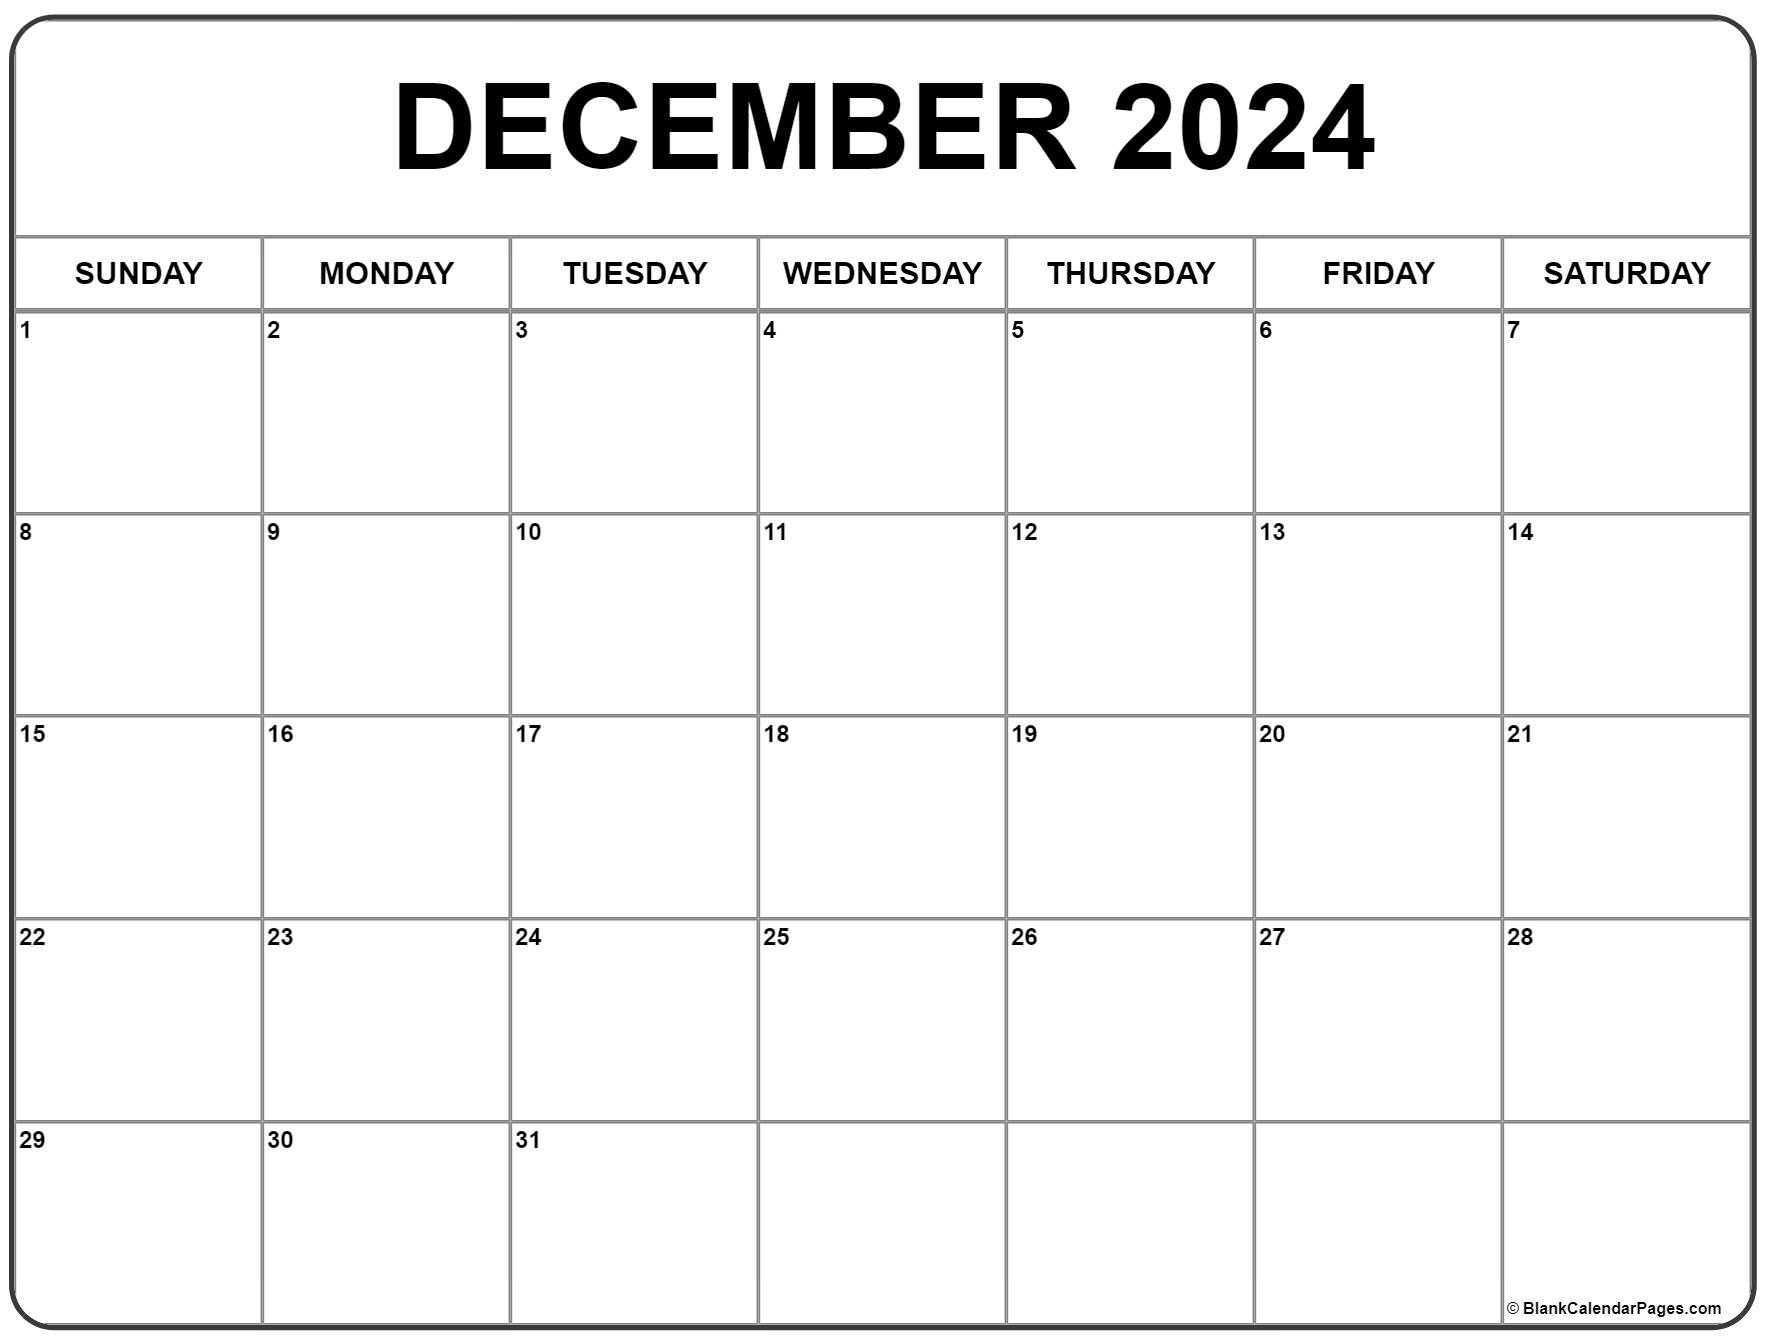 December 2024 Calendar | Free Printable Calendar with regard to Free Printable Blank Calendar December 2024